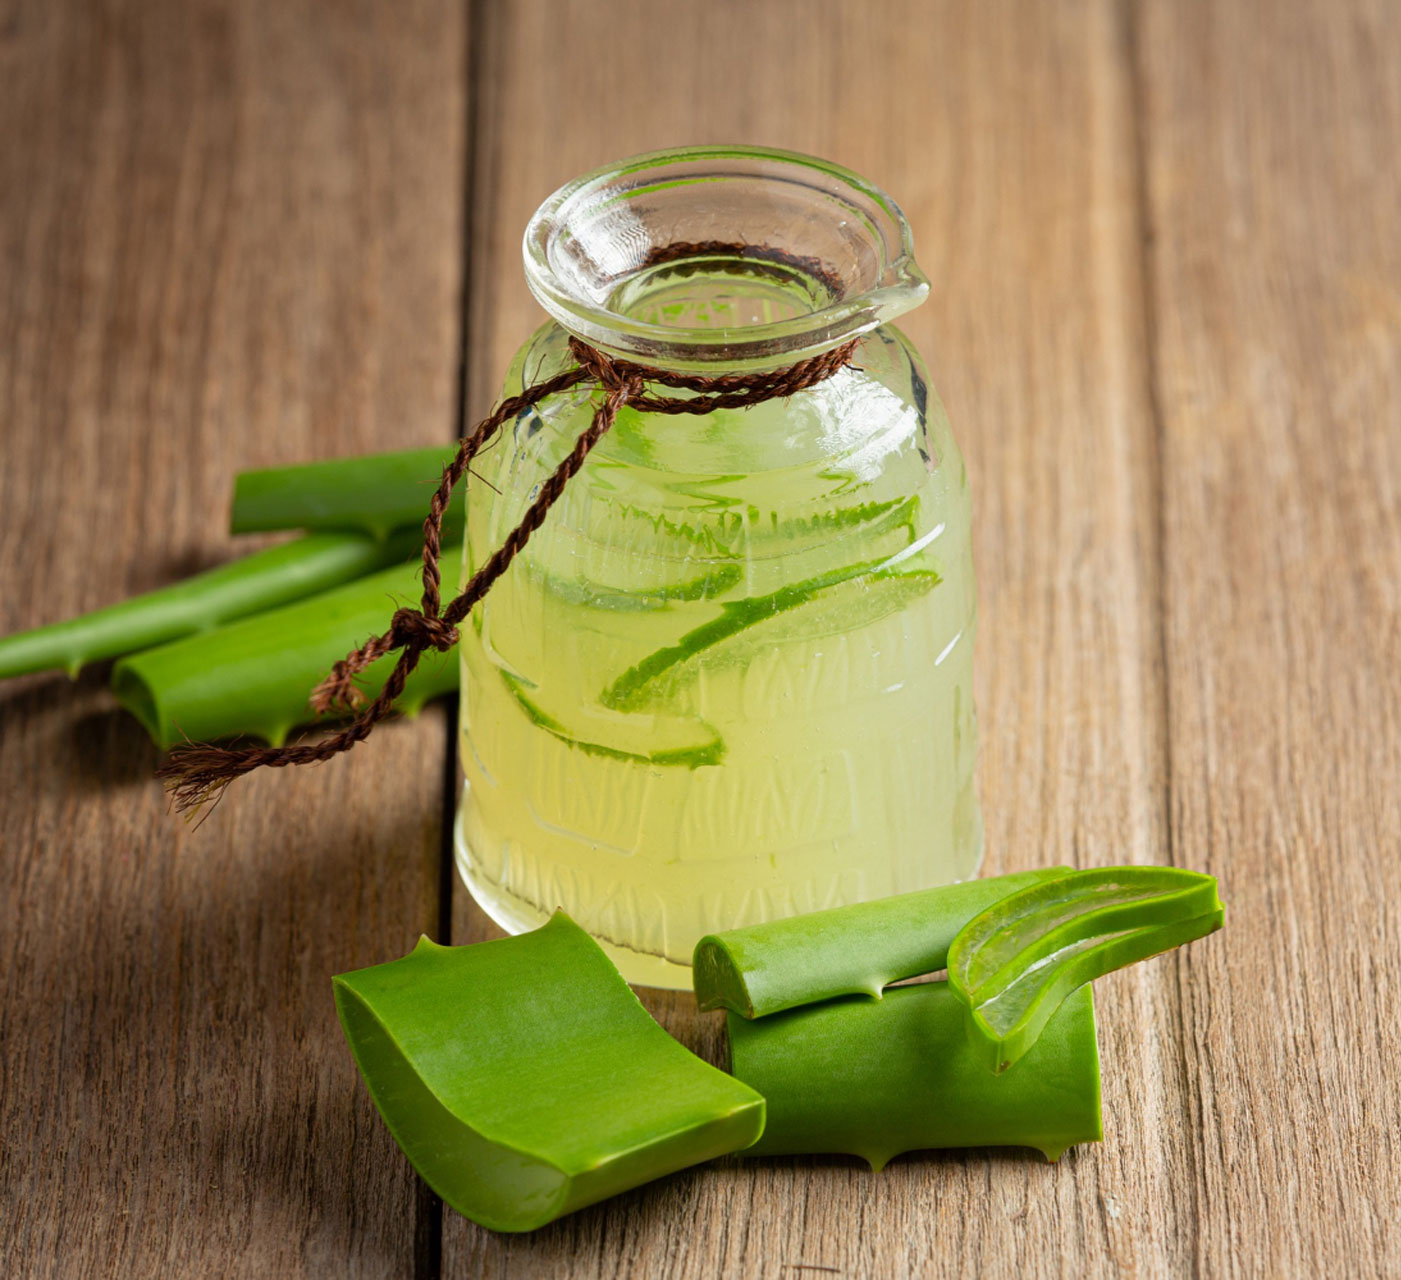 8 Healthy Reasons To Drink Aloe Vera Juice Everyday